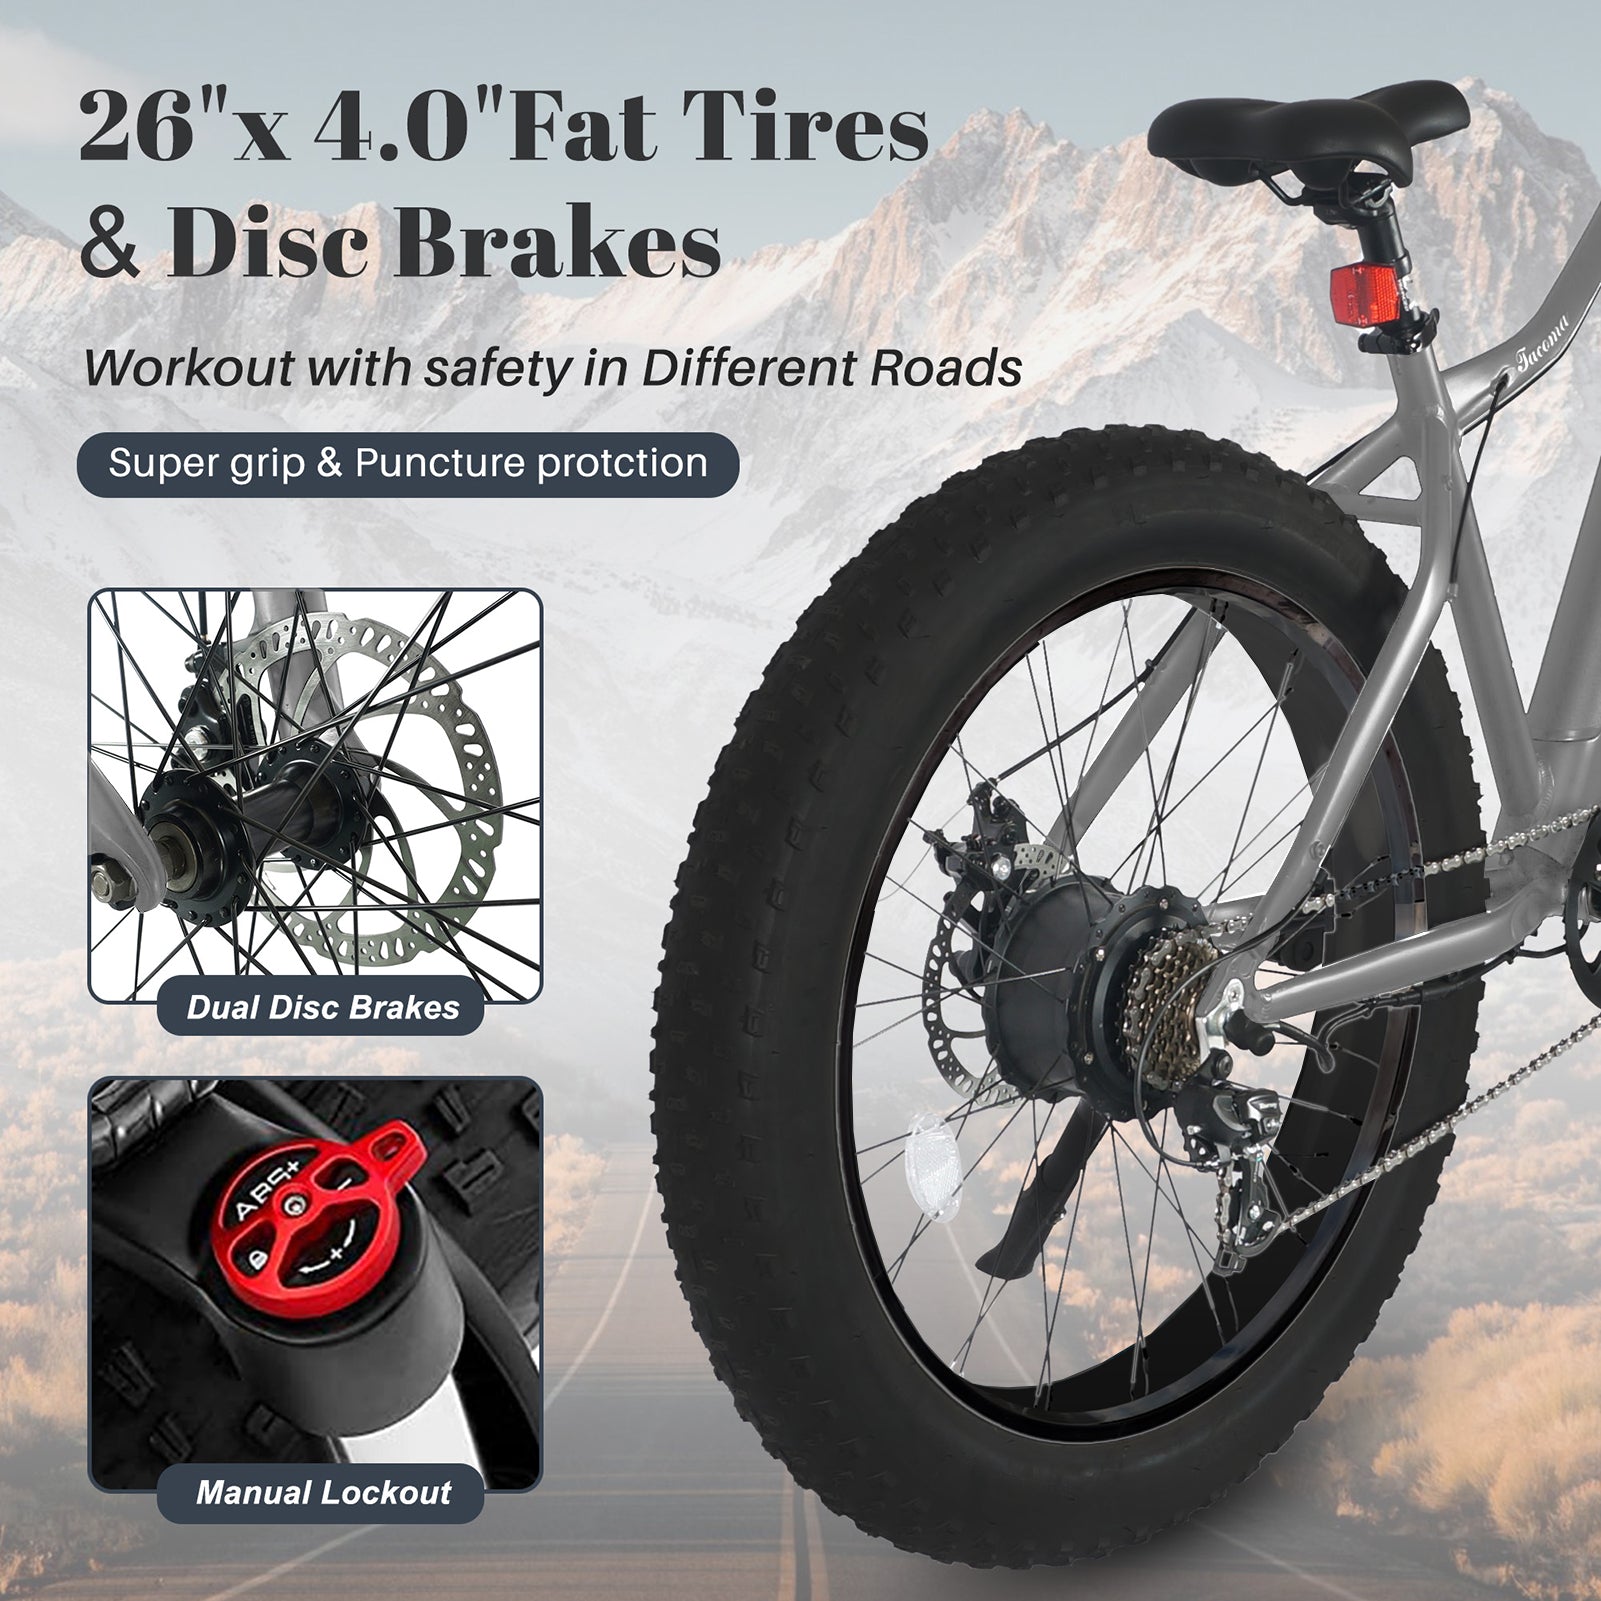 Tracer Tacoma 26"800W Electric Fat Tire Bike w/ Dual Suspensions.